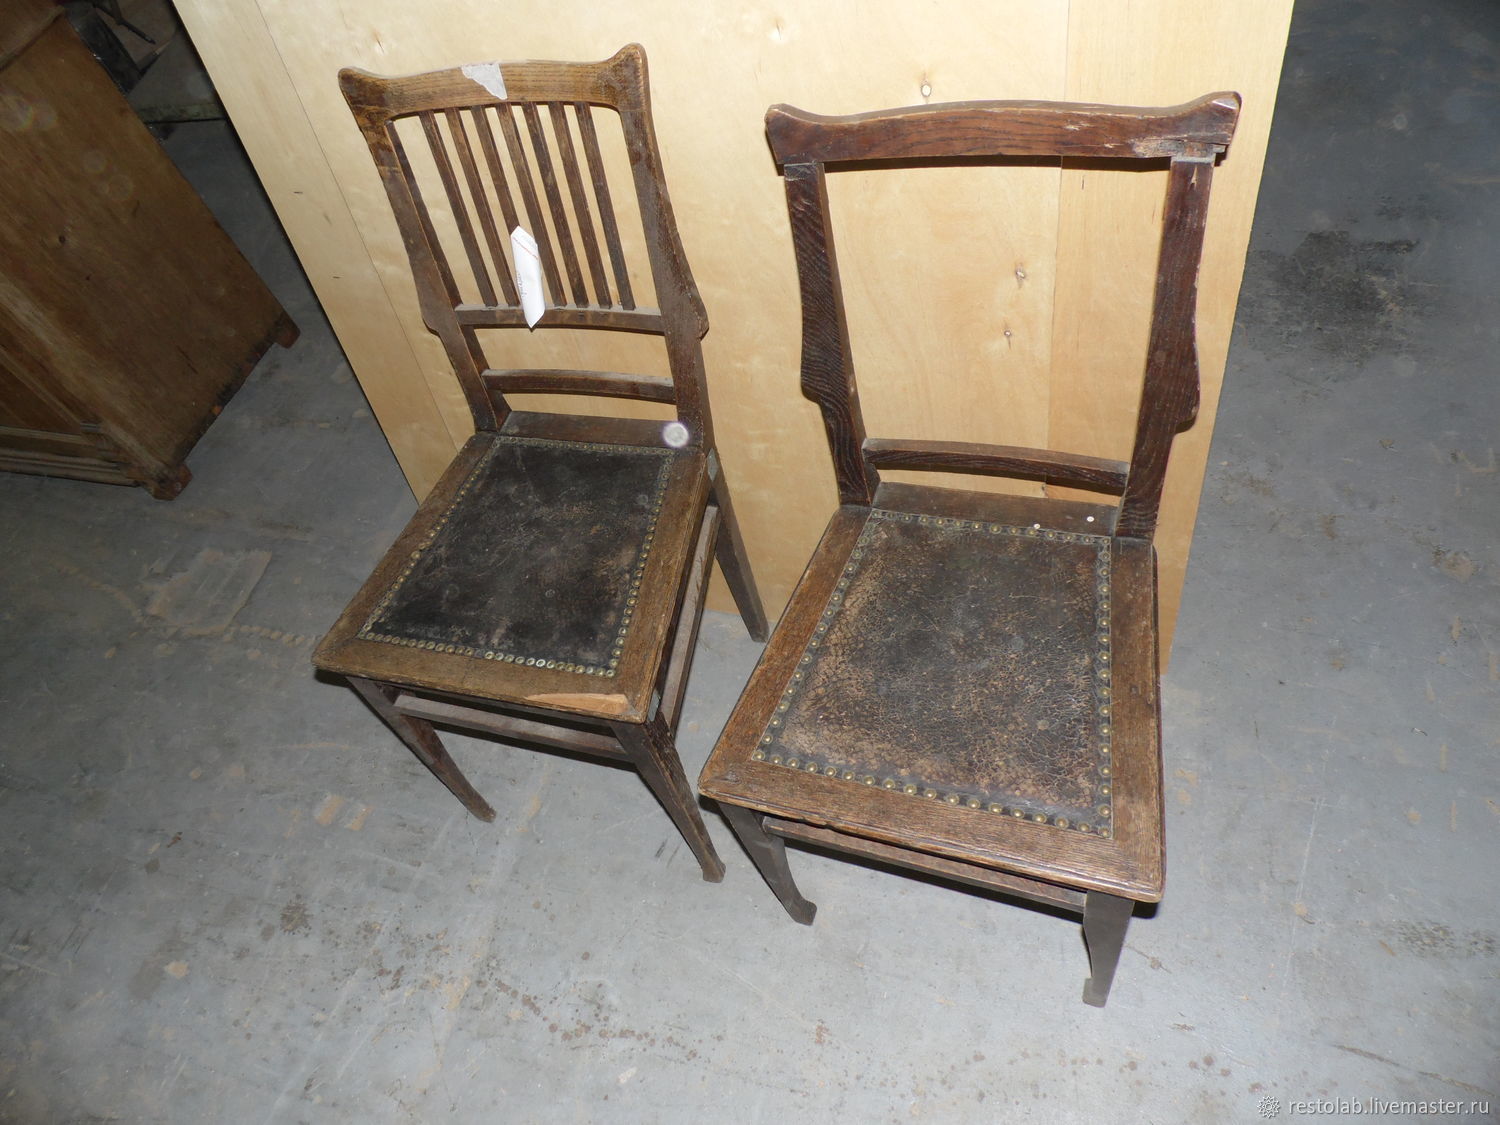 реставрация стула деревянного в домашних условиях